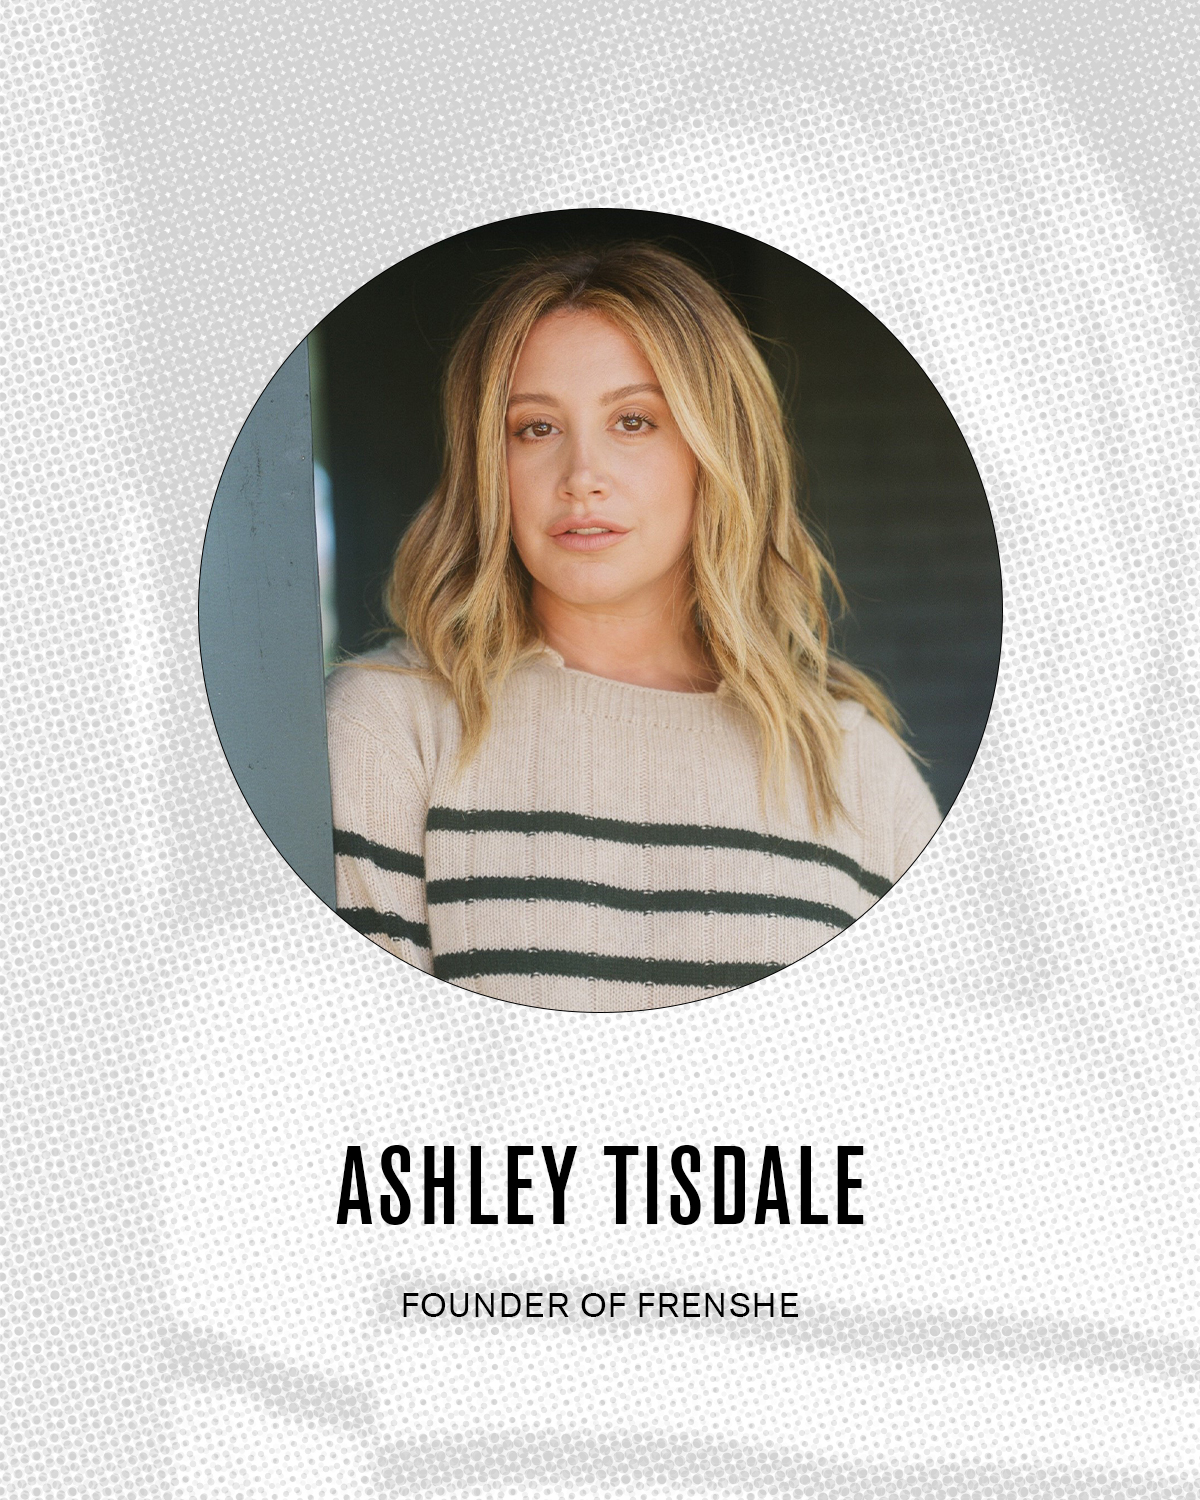 Ashley Tisdale the founder of Frenshe.